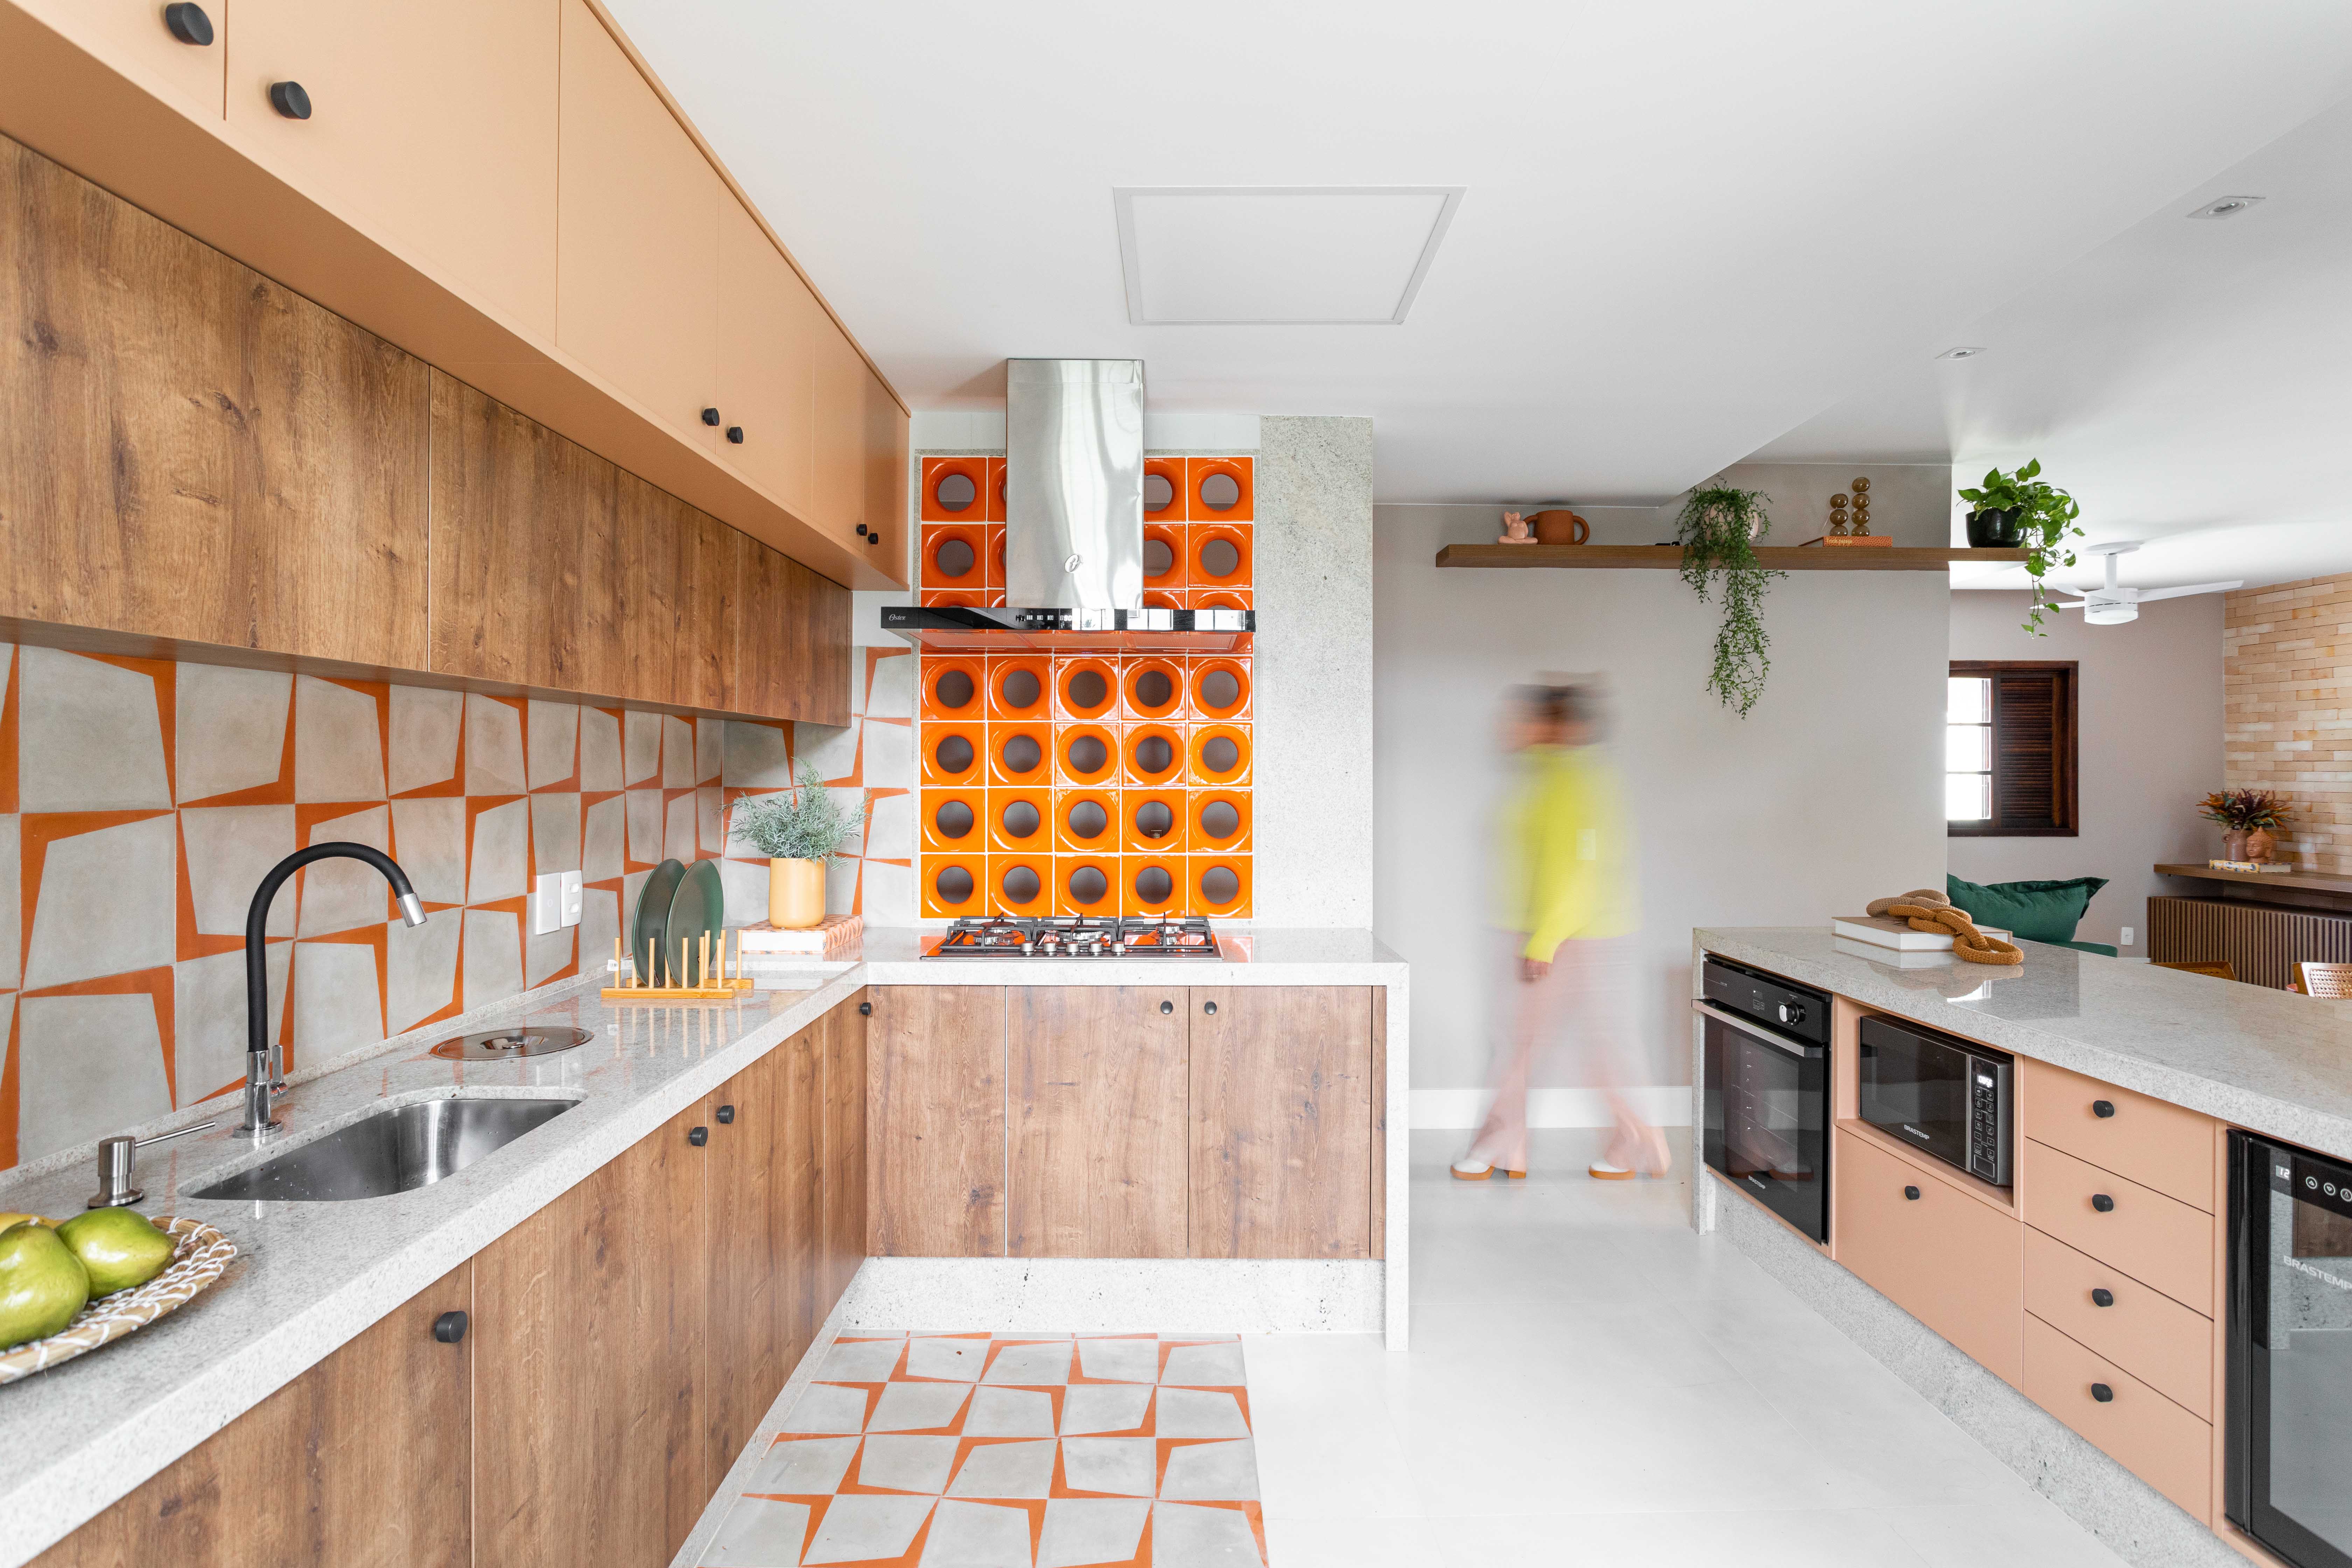 Projeto de Lívia Ornellas. Na foto, cozinha com cobogós laranjas, ladrilhos laranjas, marcenaria e bancada branca.